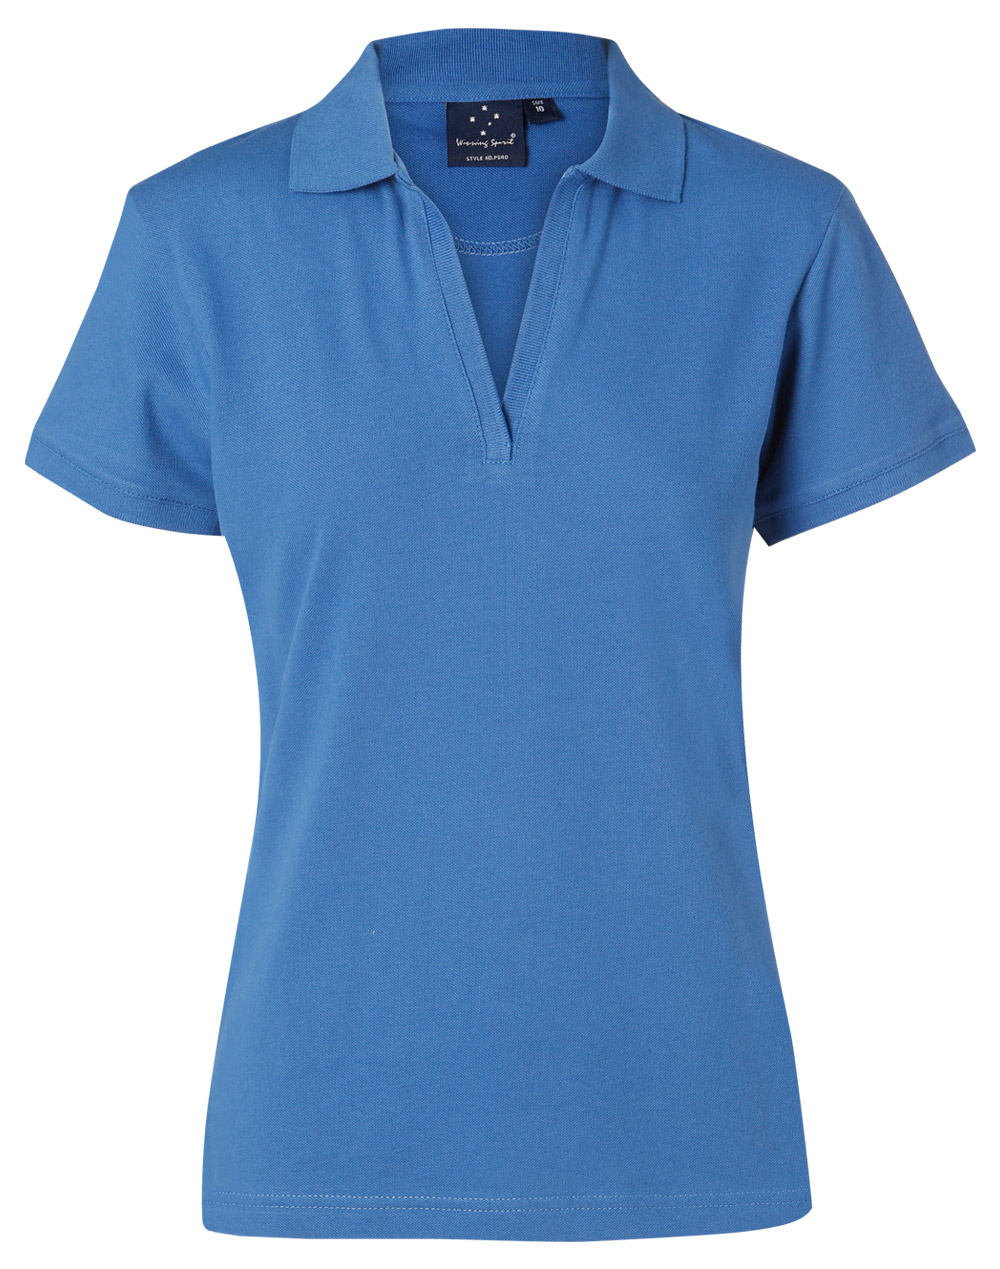 Custom (Azure Blue) Long Beach Ledies Polo Shirts Online Perth Australia